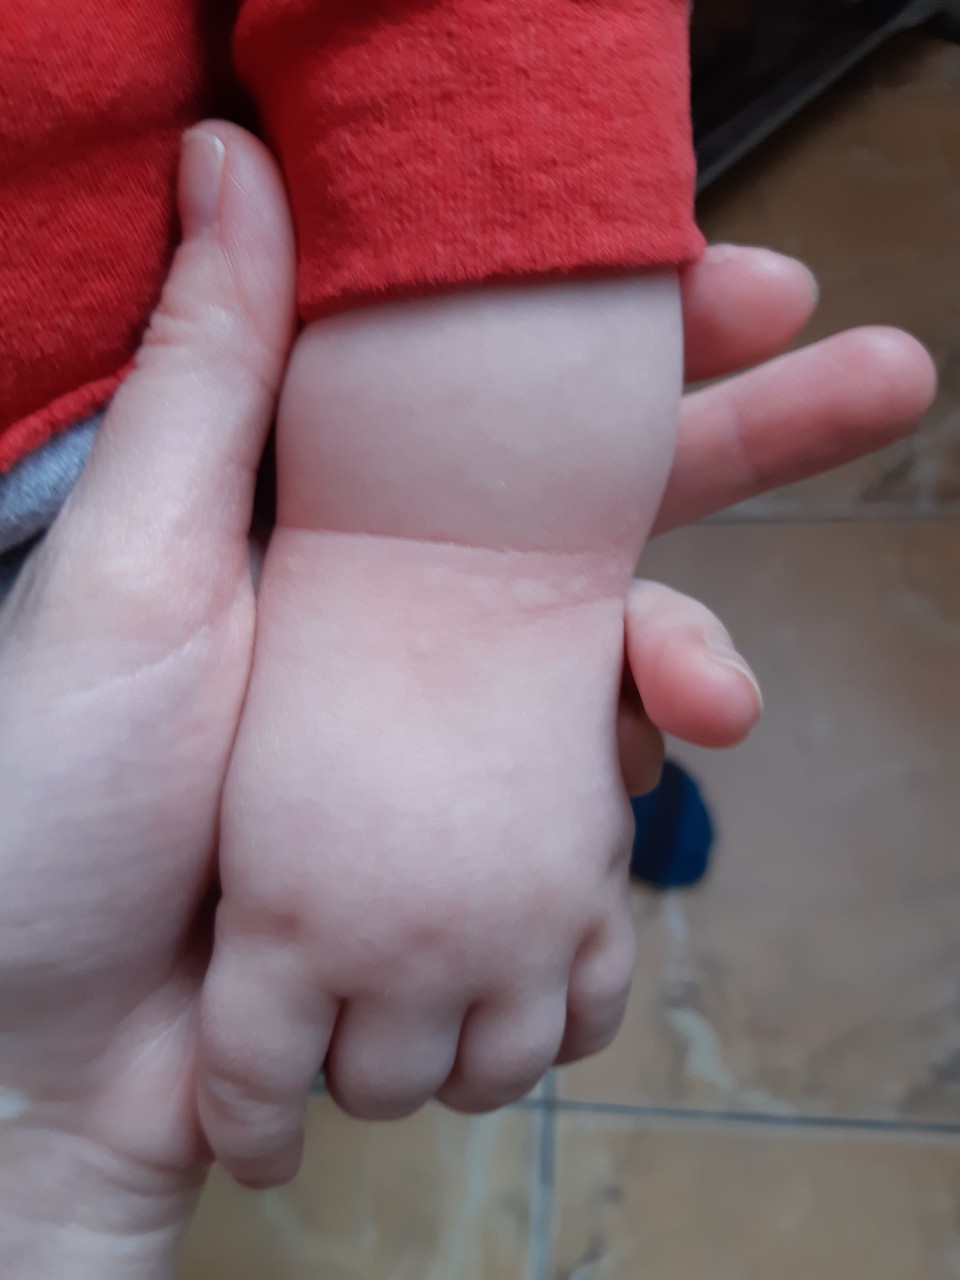 Обсыпаны руки у ребенка причины